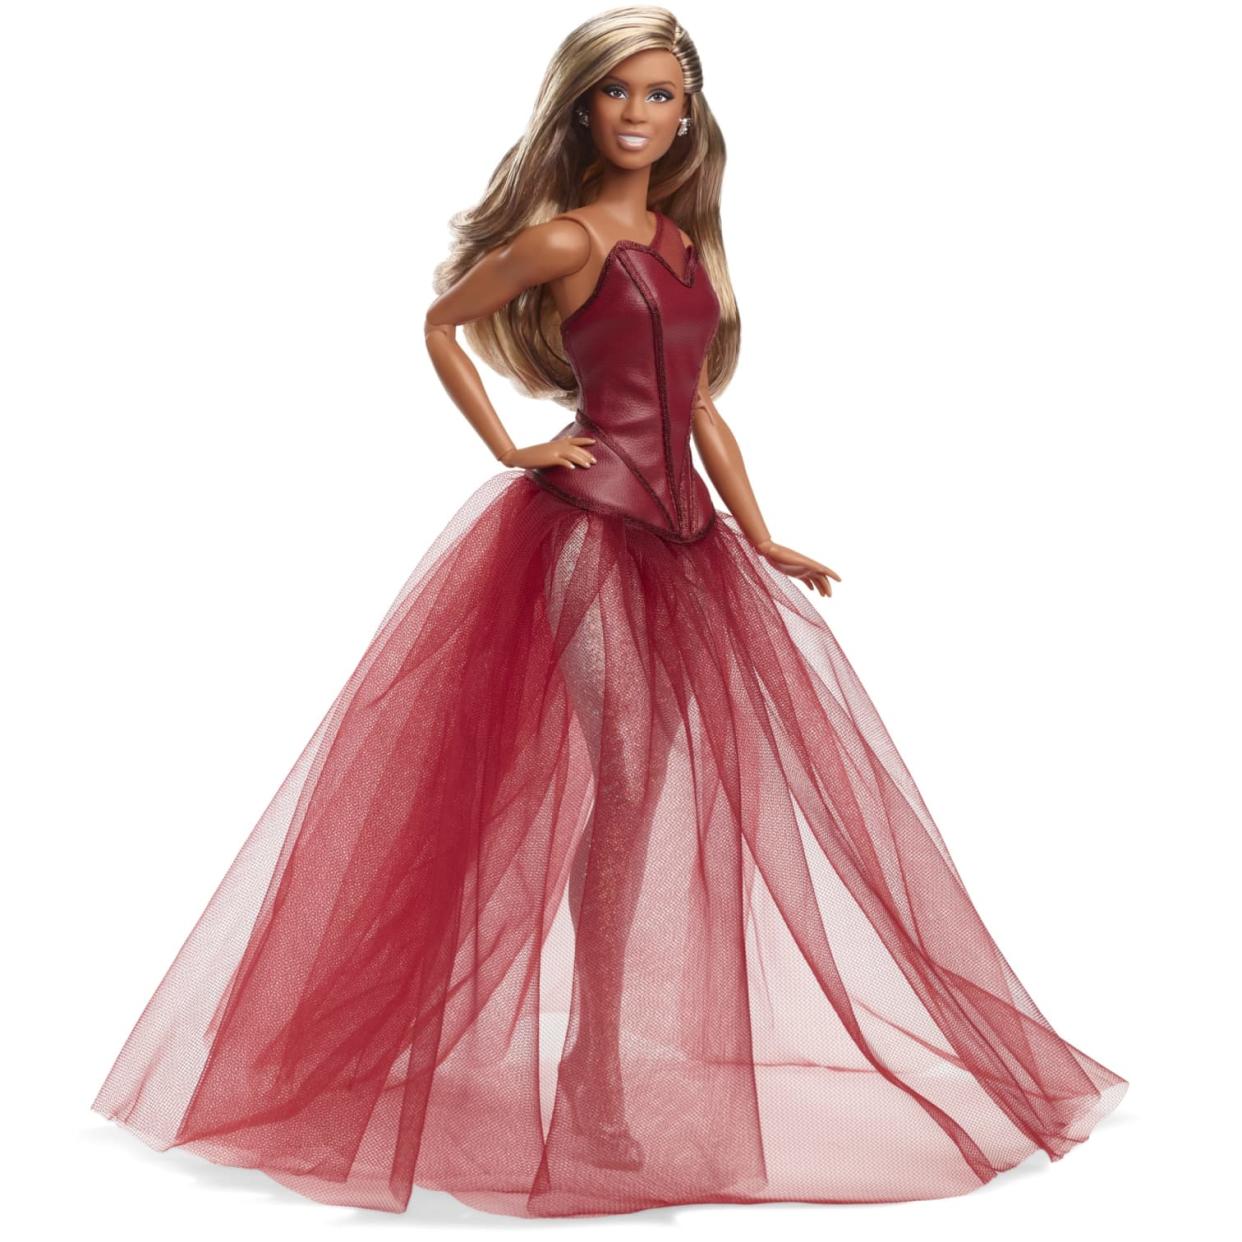 2022 Laverne Cox Barbie Tribute Collection Doll. (Mattel)